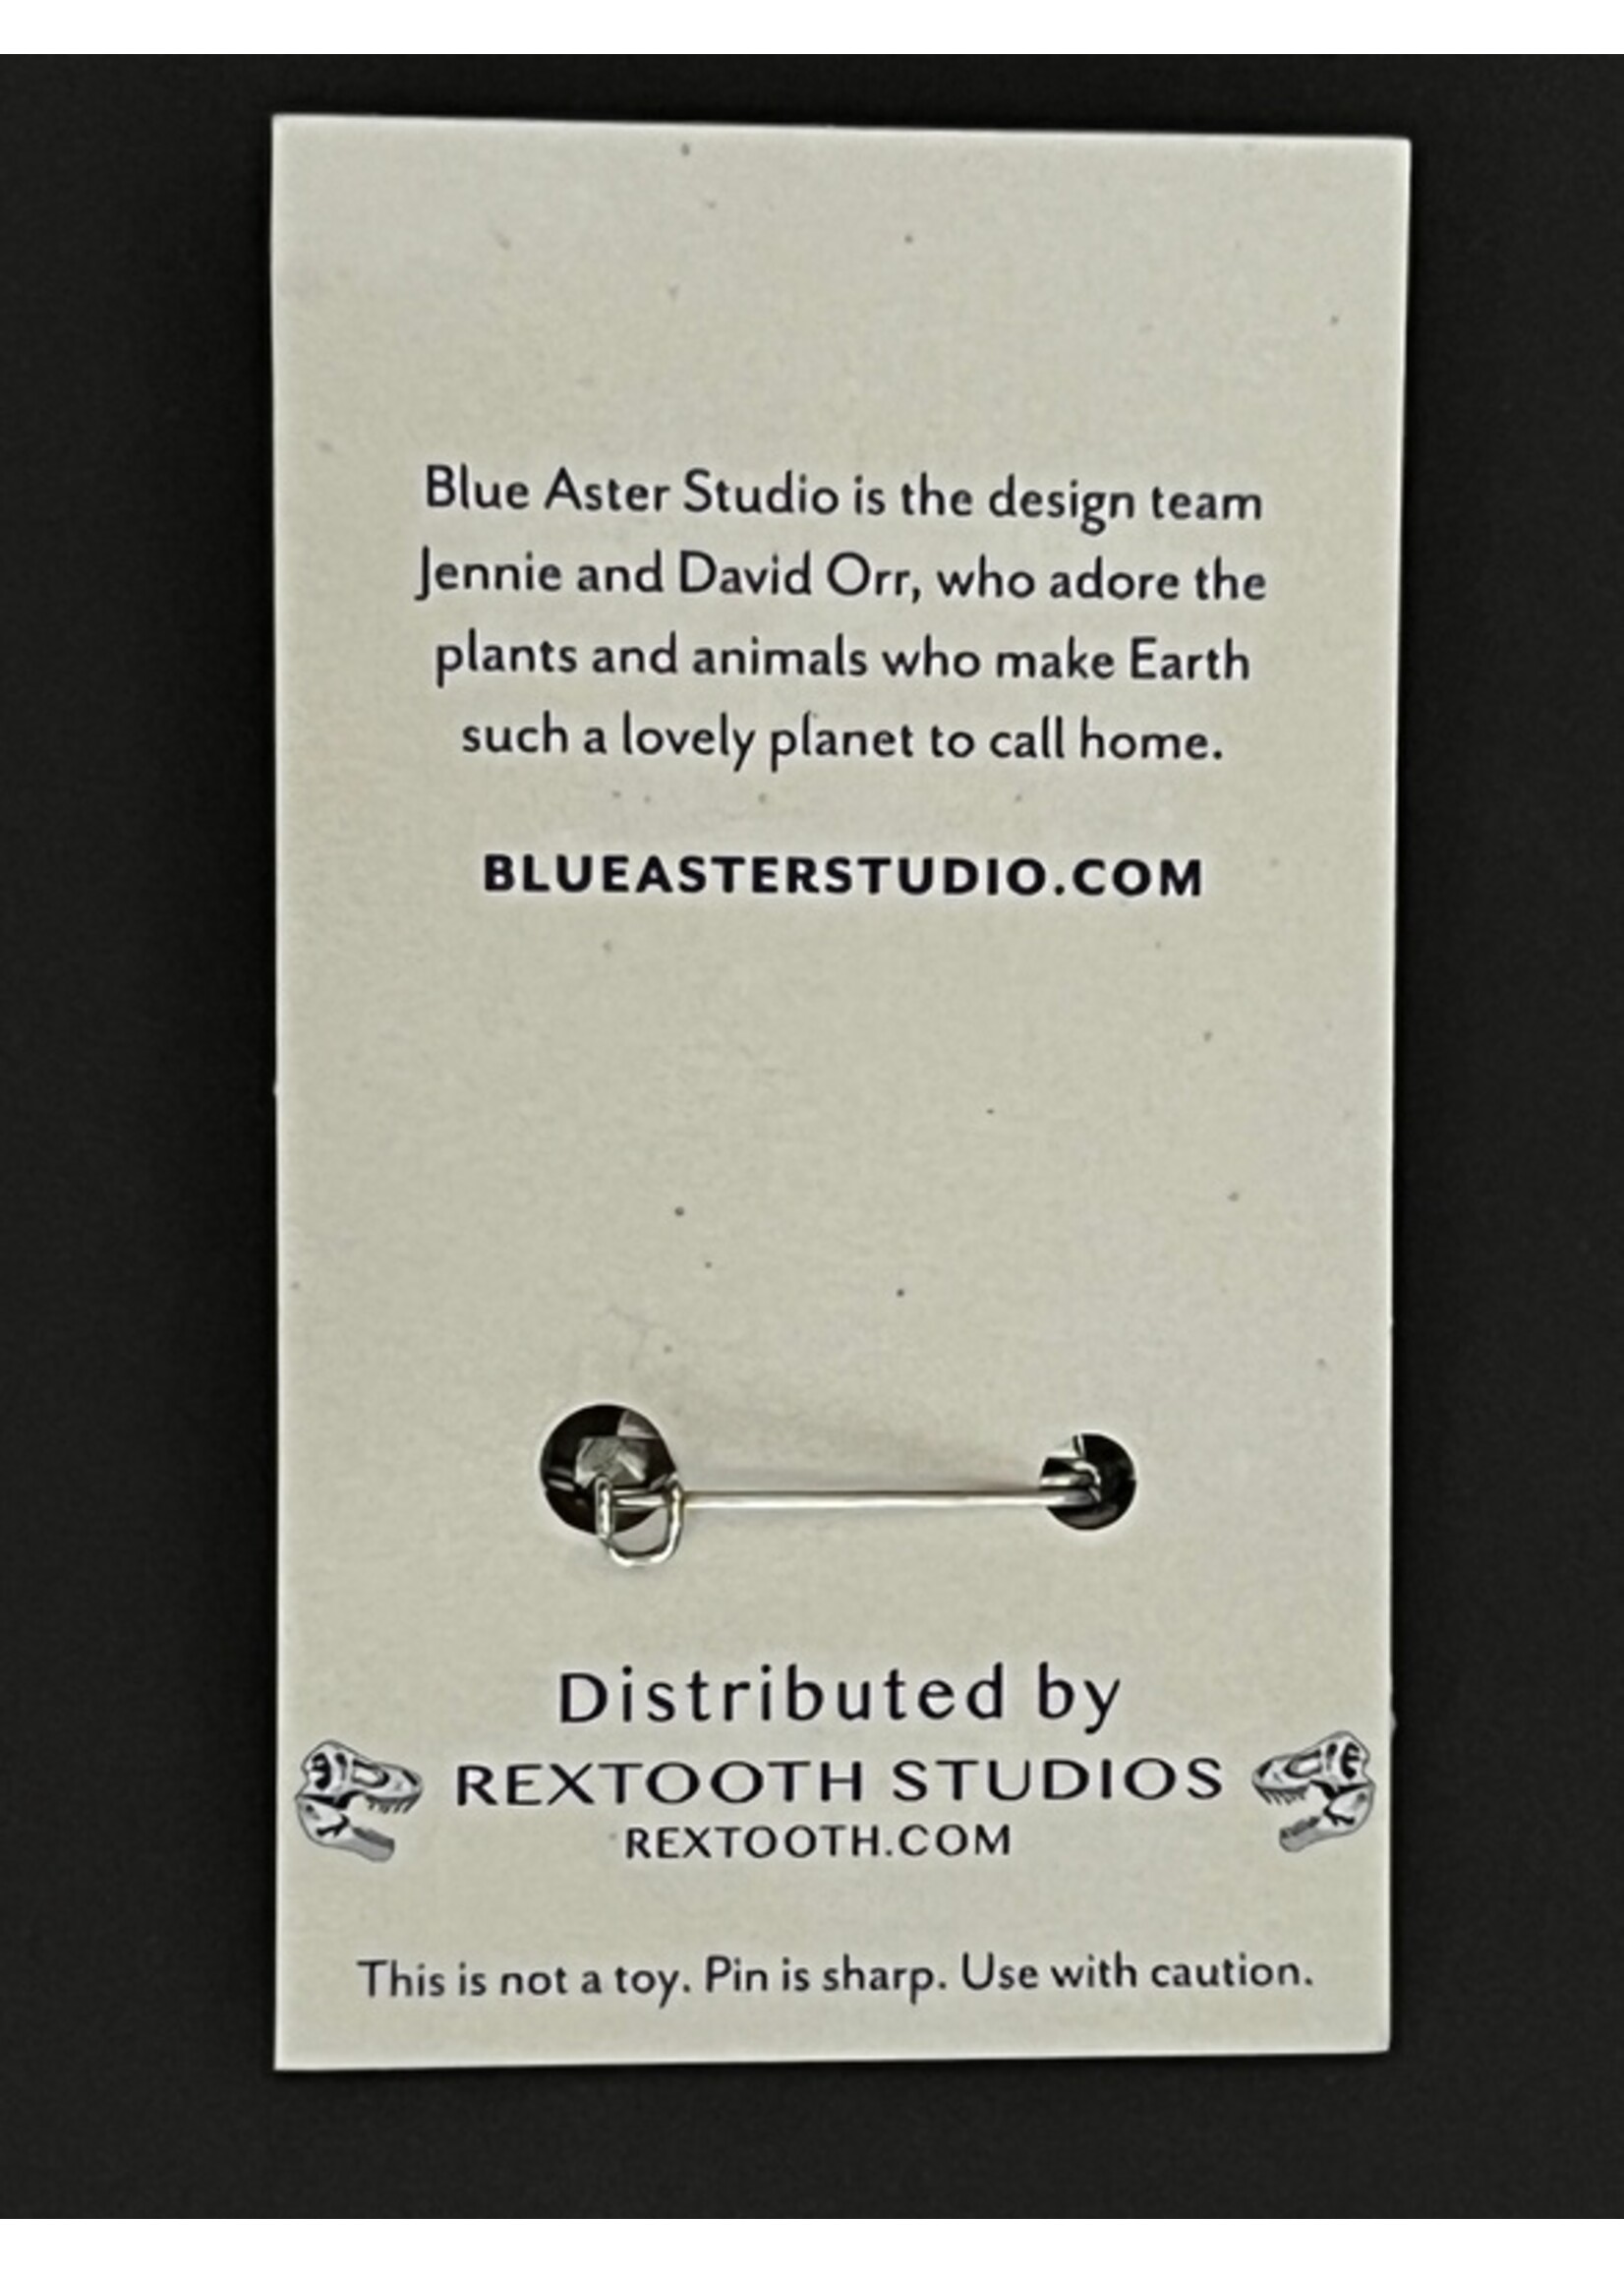 Rextooth Studios Bat Button, "Bats so Awesome"